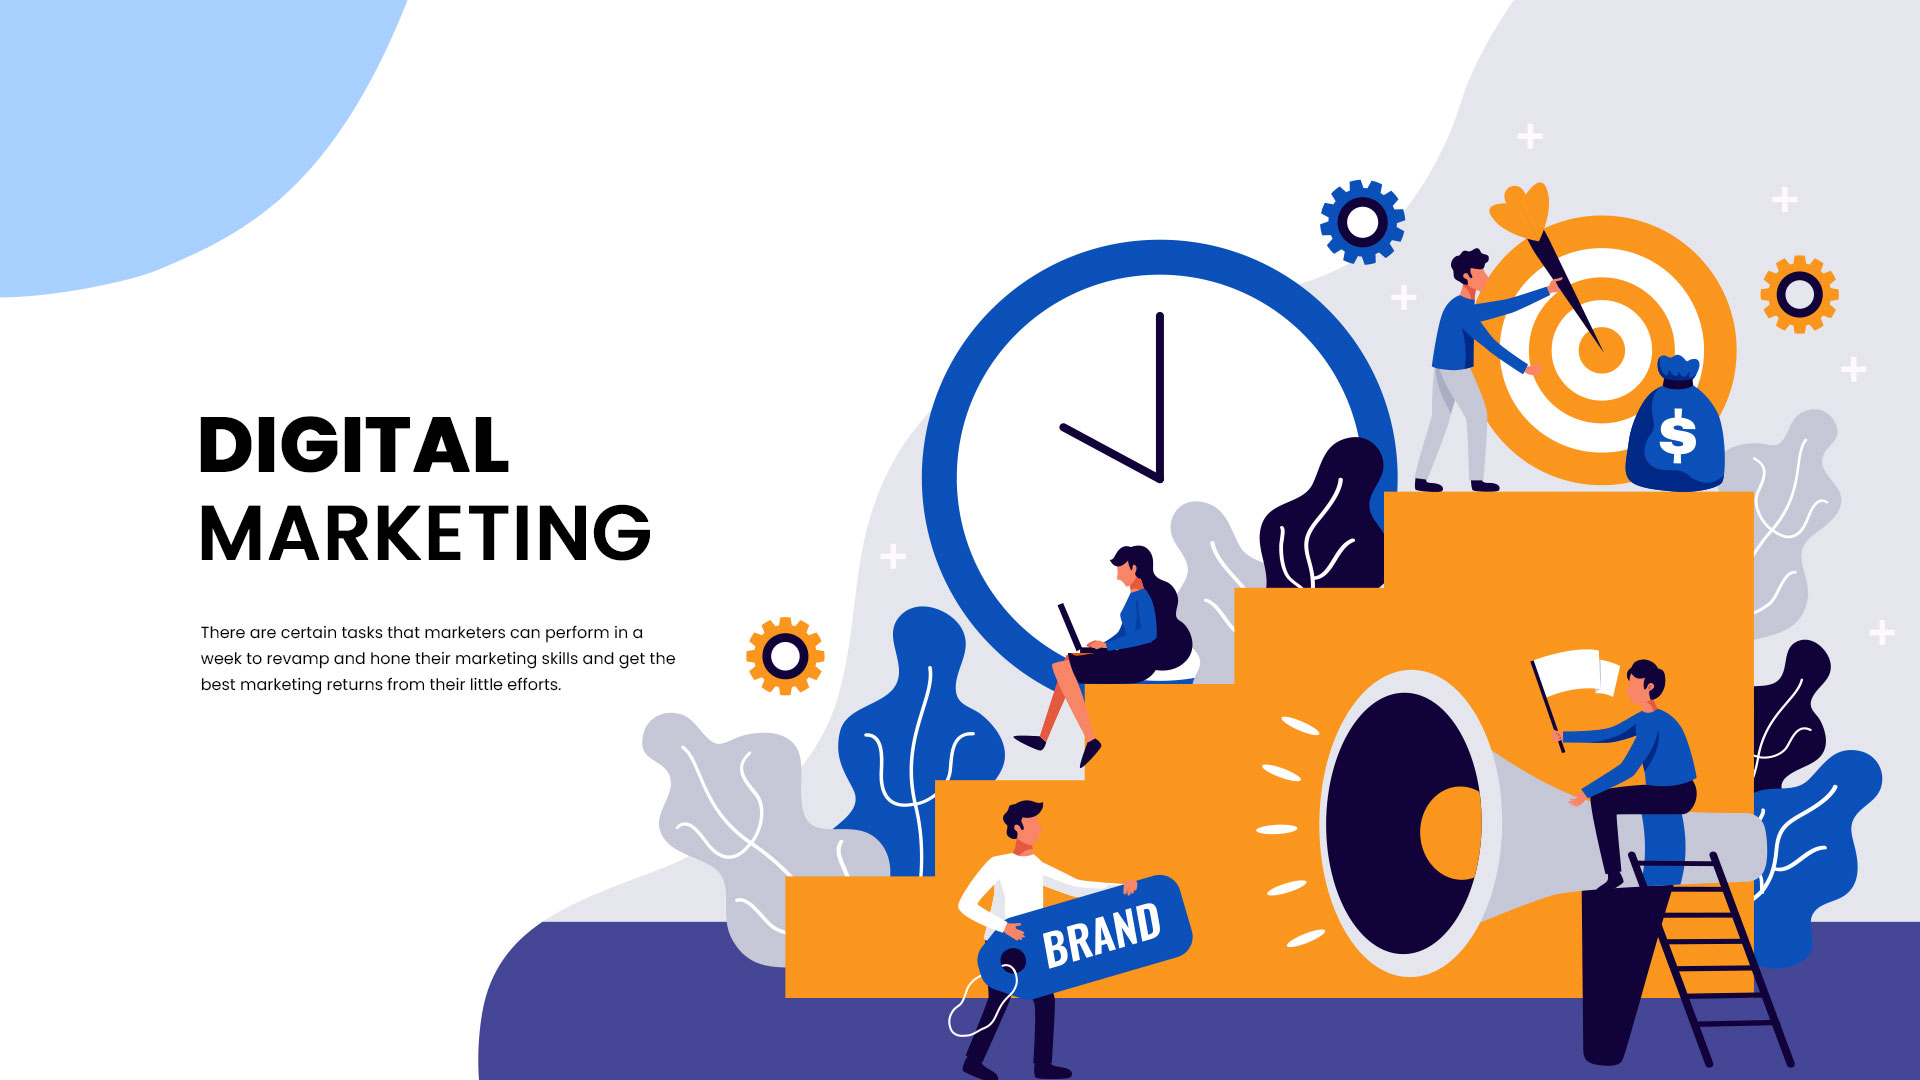 Improve Your Digital Marketing Skills In Half An Hour